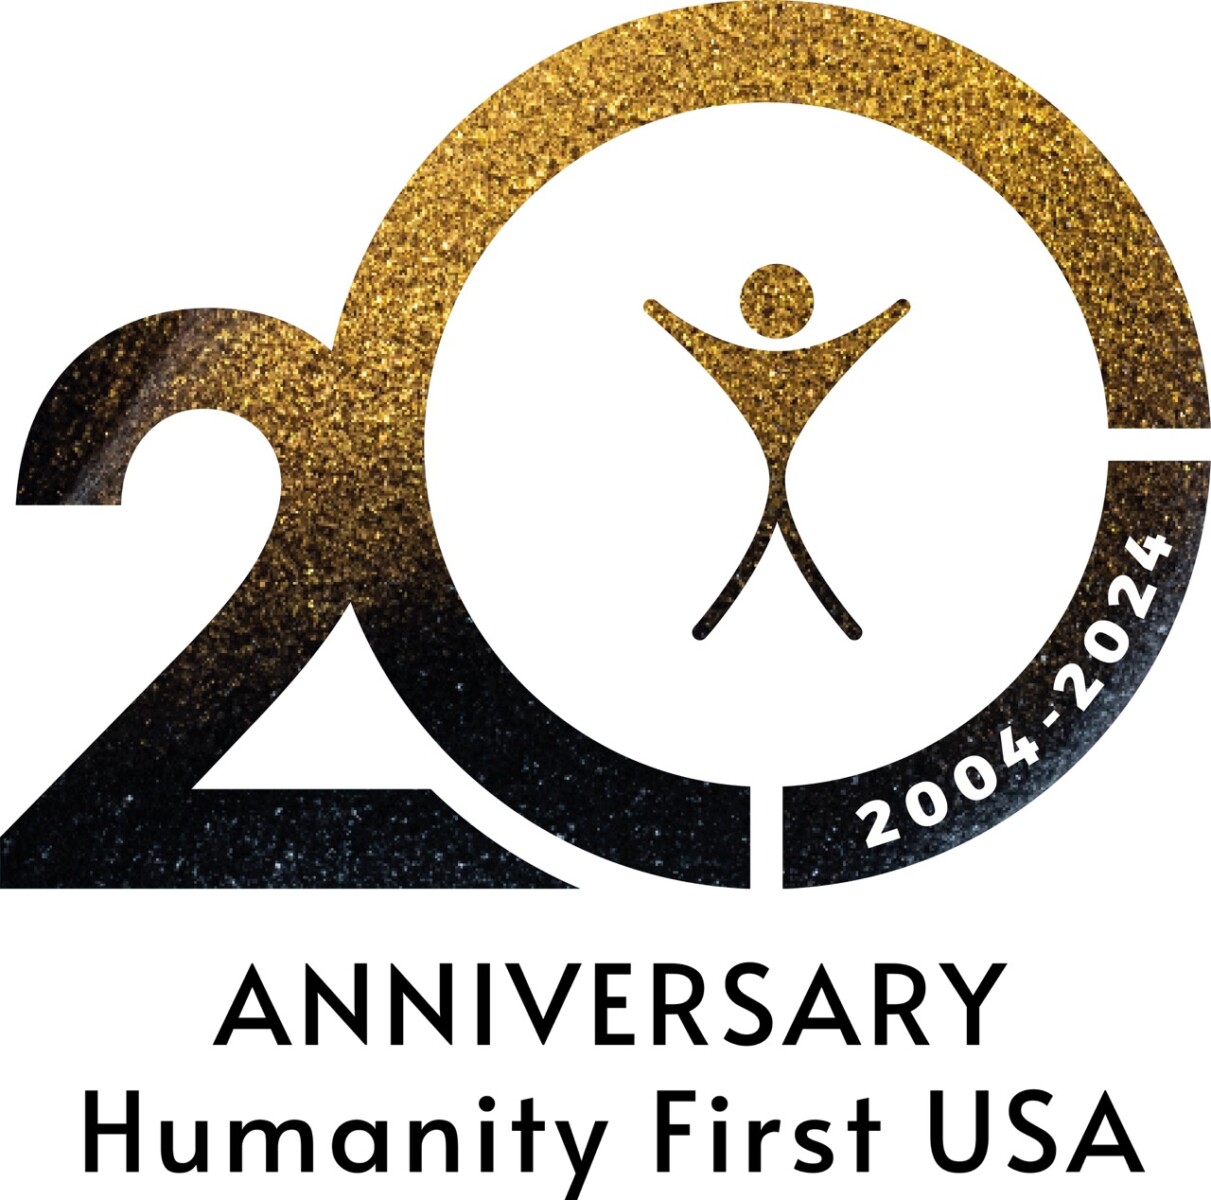 Humanity First USA 20th Anniversary Gala